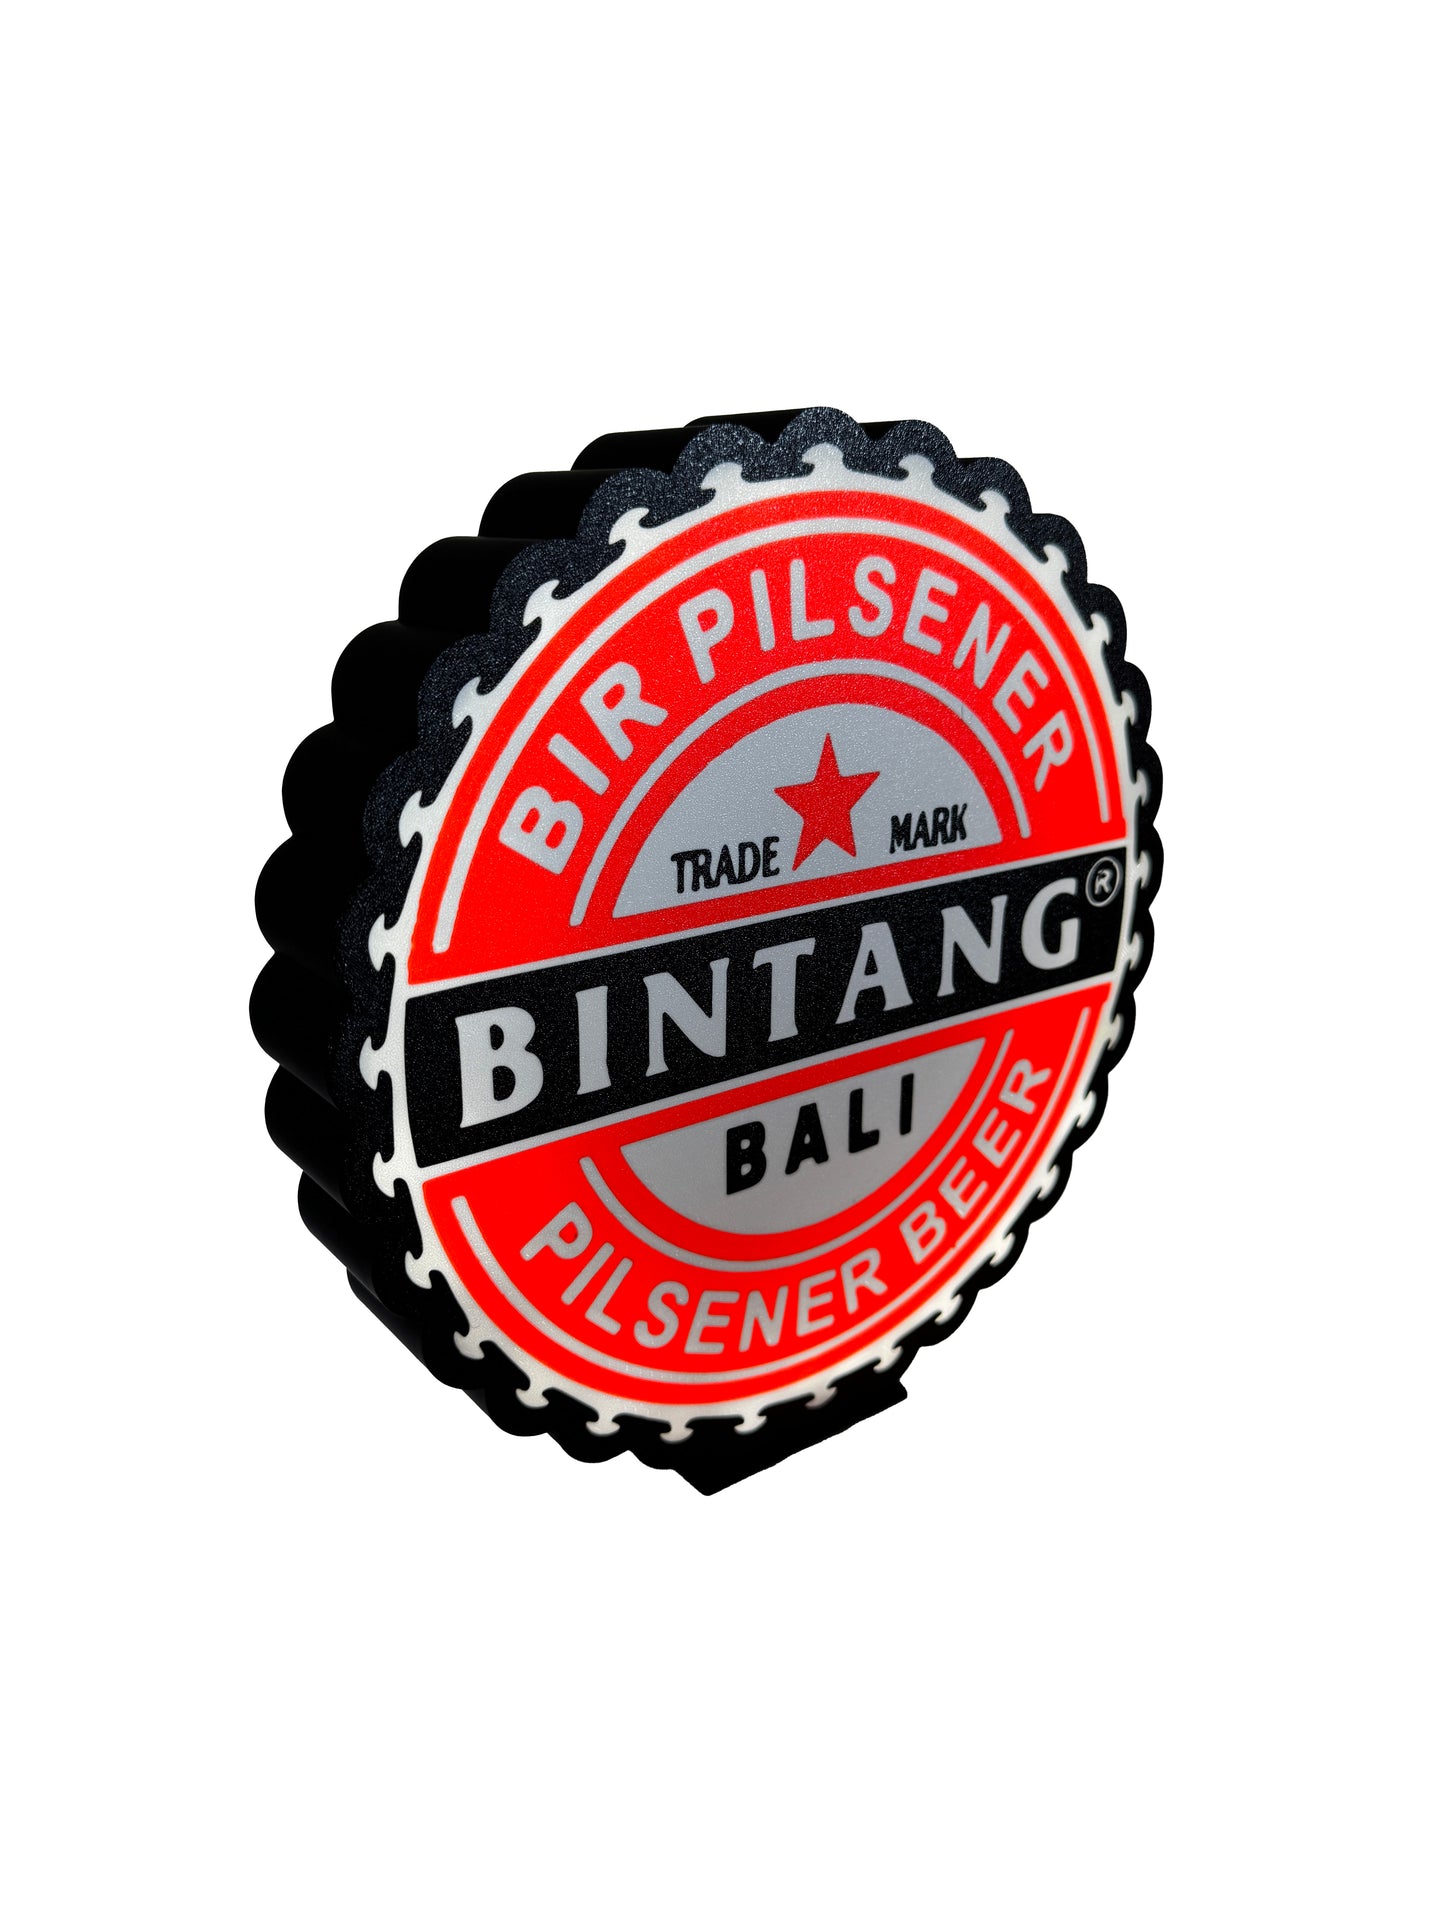 Bingtang Bali led light box